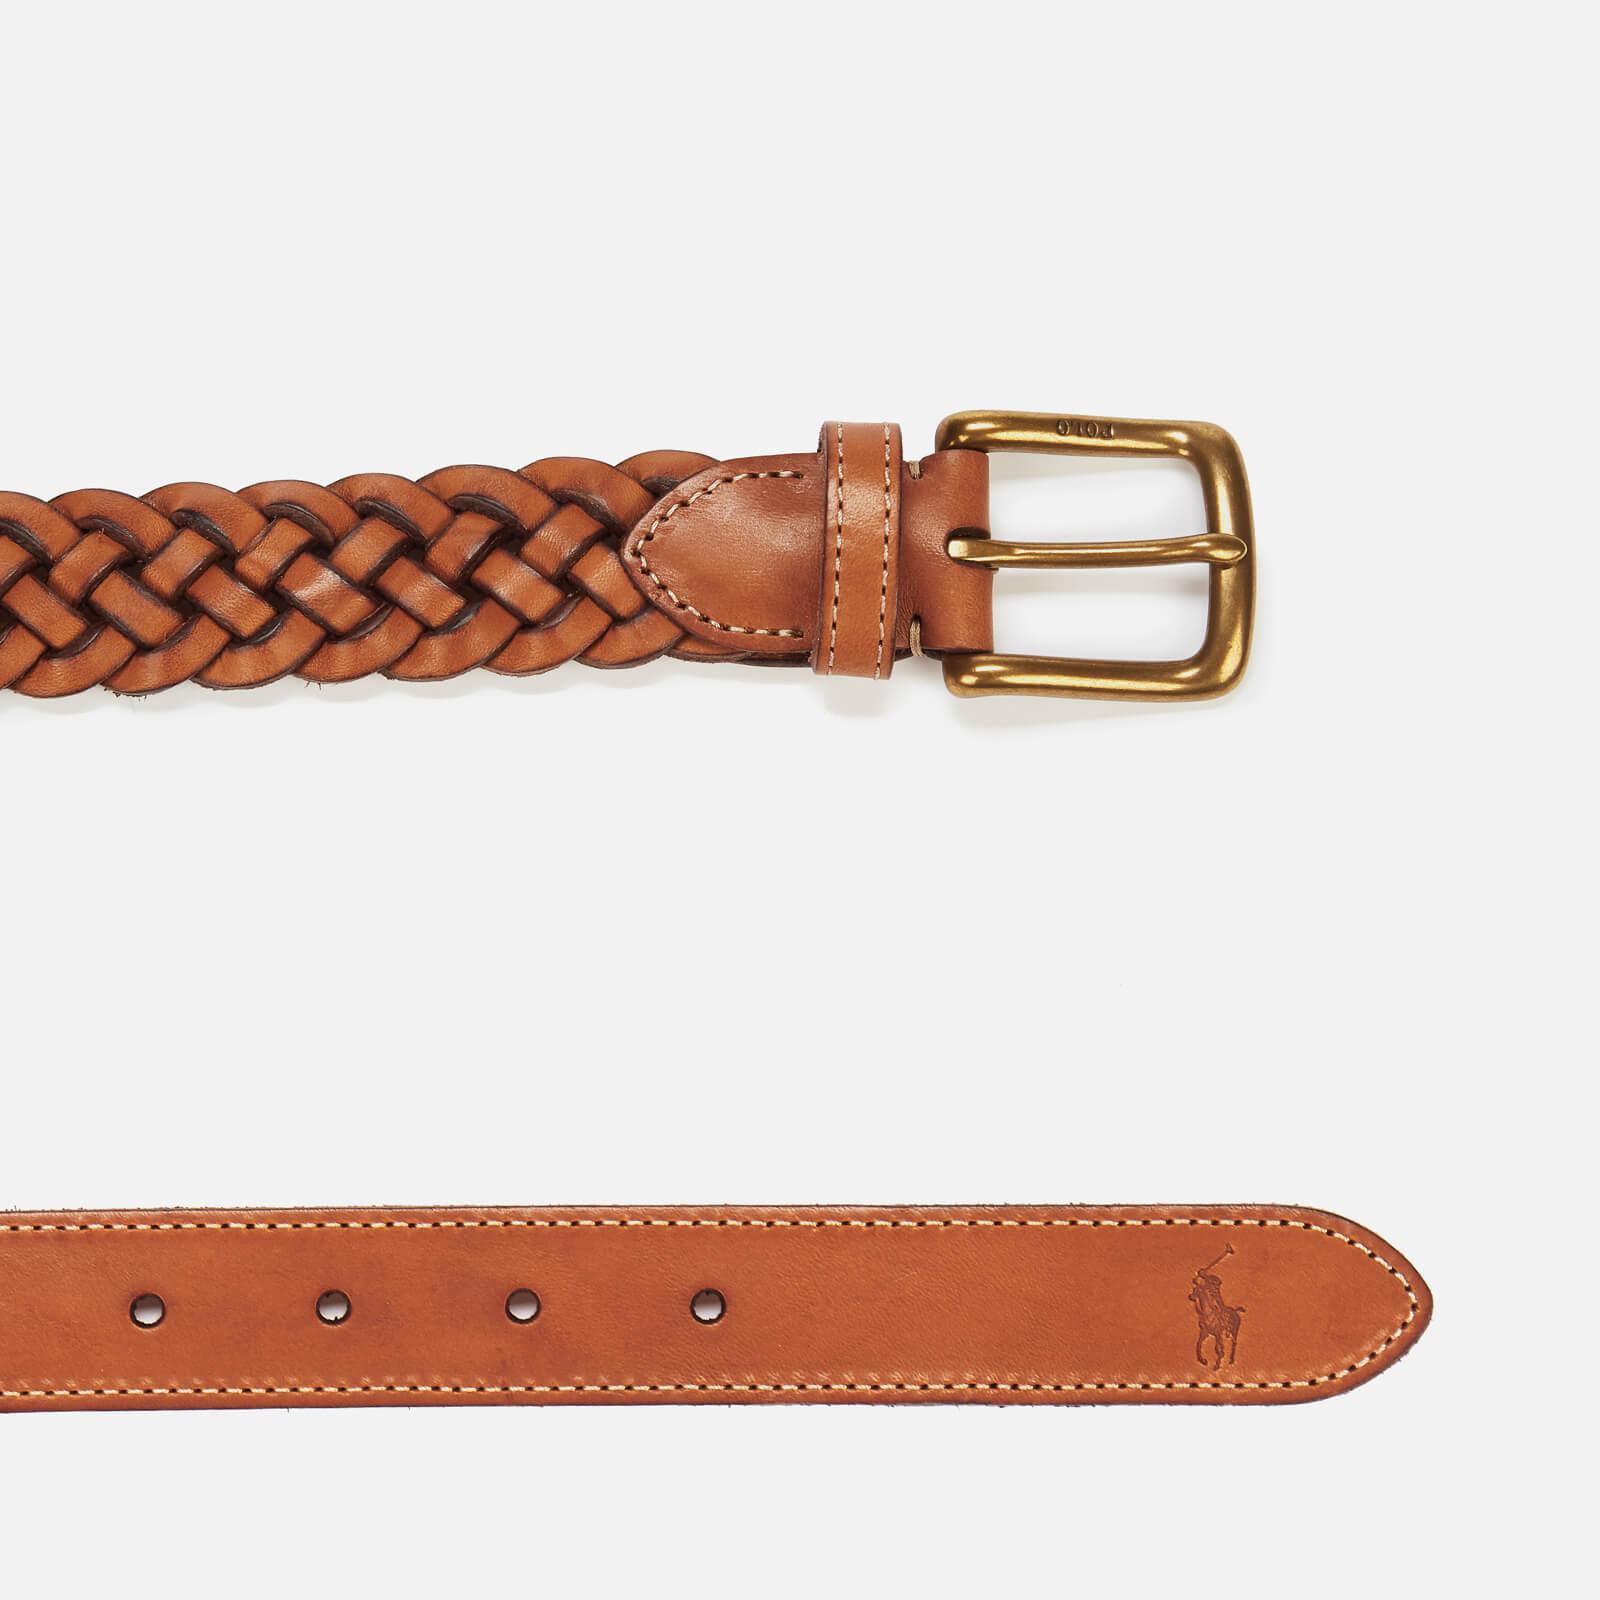 Polo Ralph Lauren Westend Braid Leather Belt in Tan (Brown) for Men - Lyst